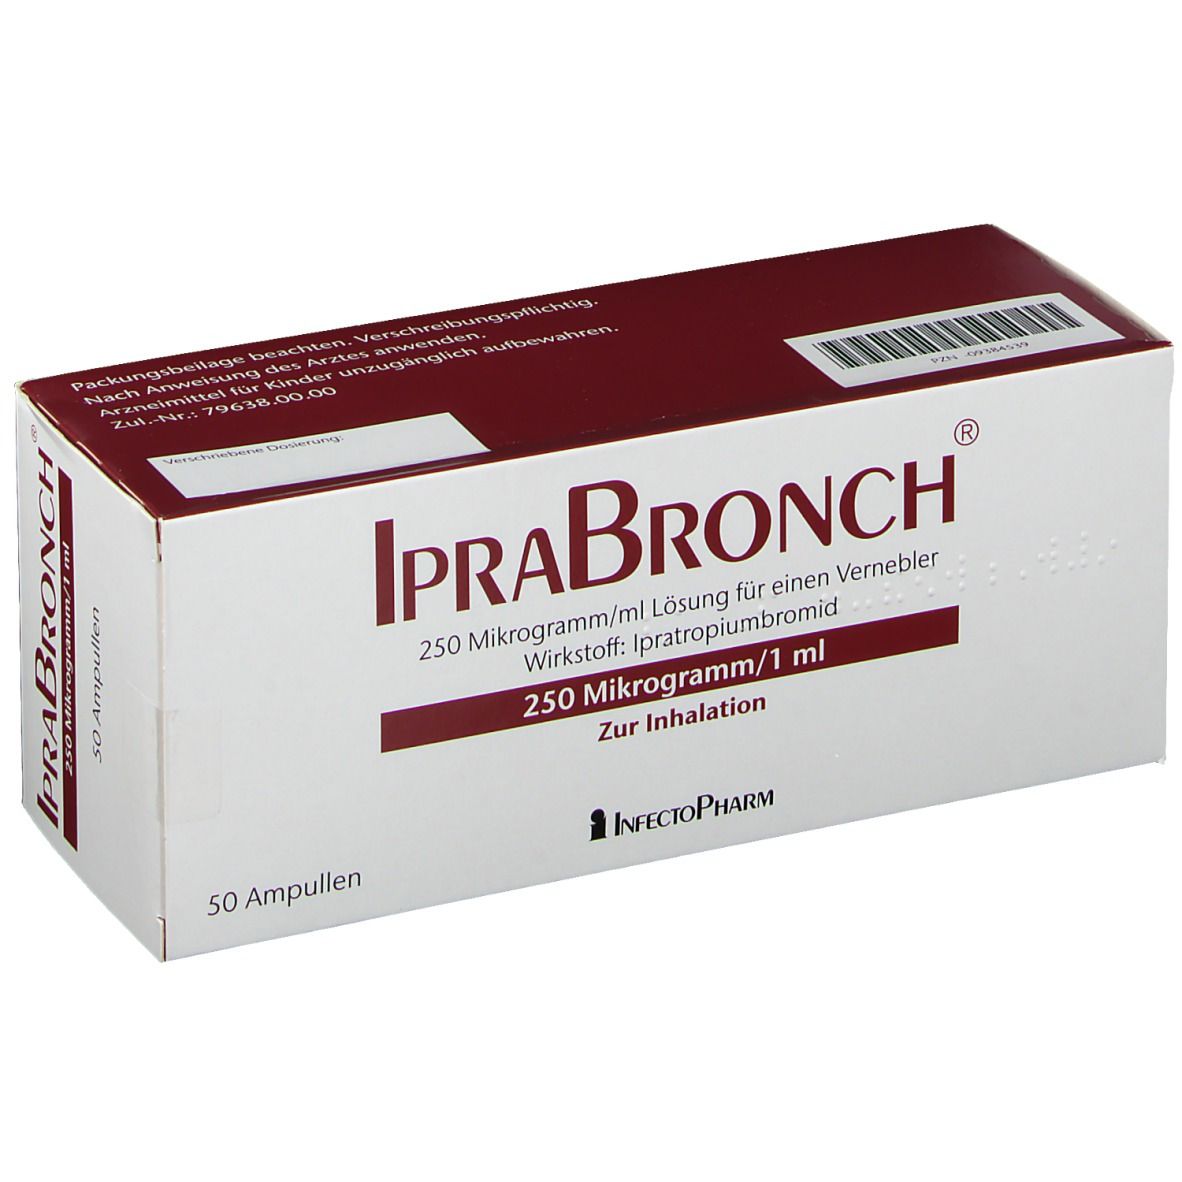 IpraBronch® 250 µg/1 ml